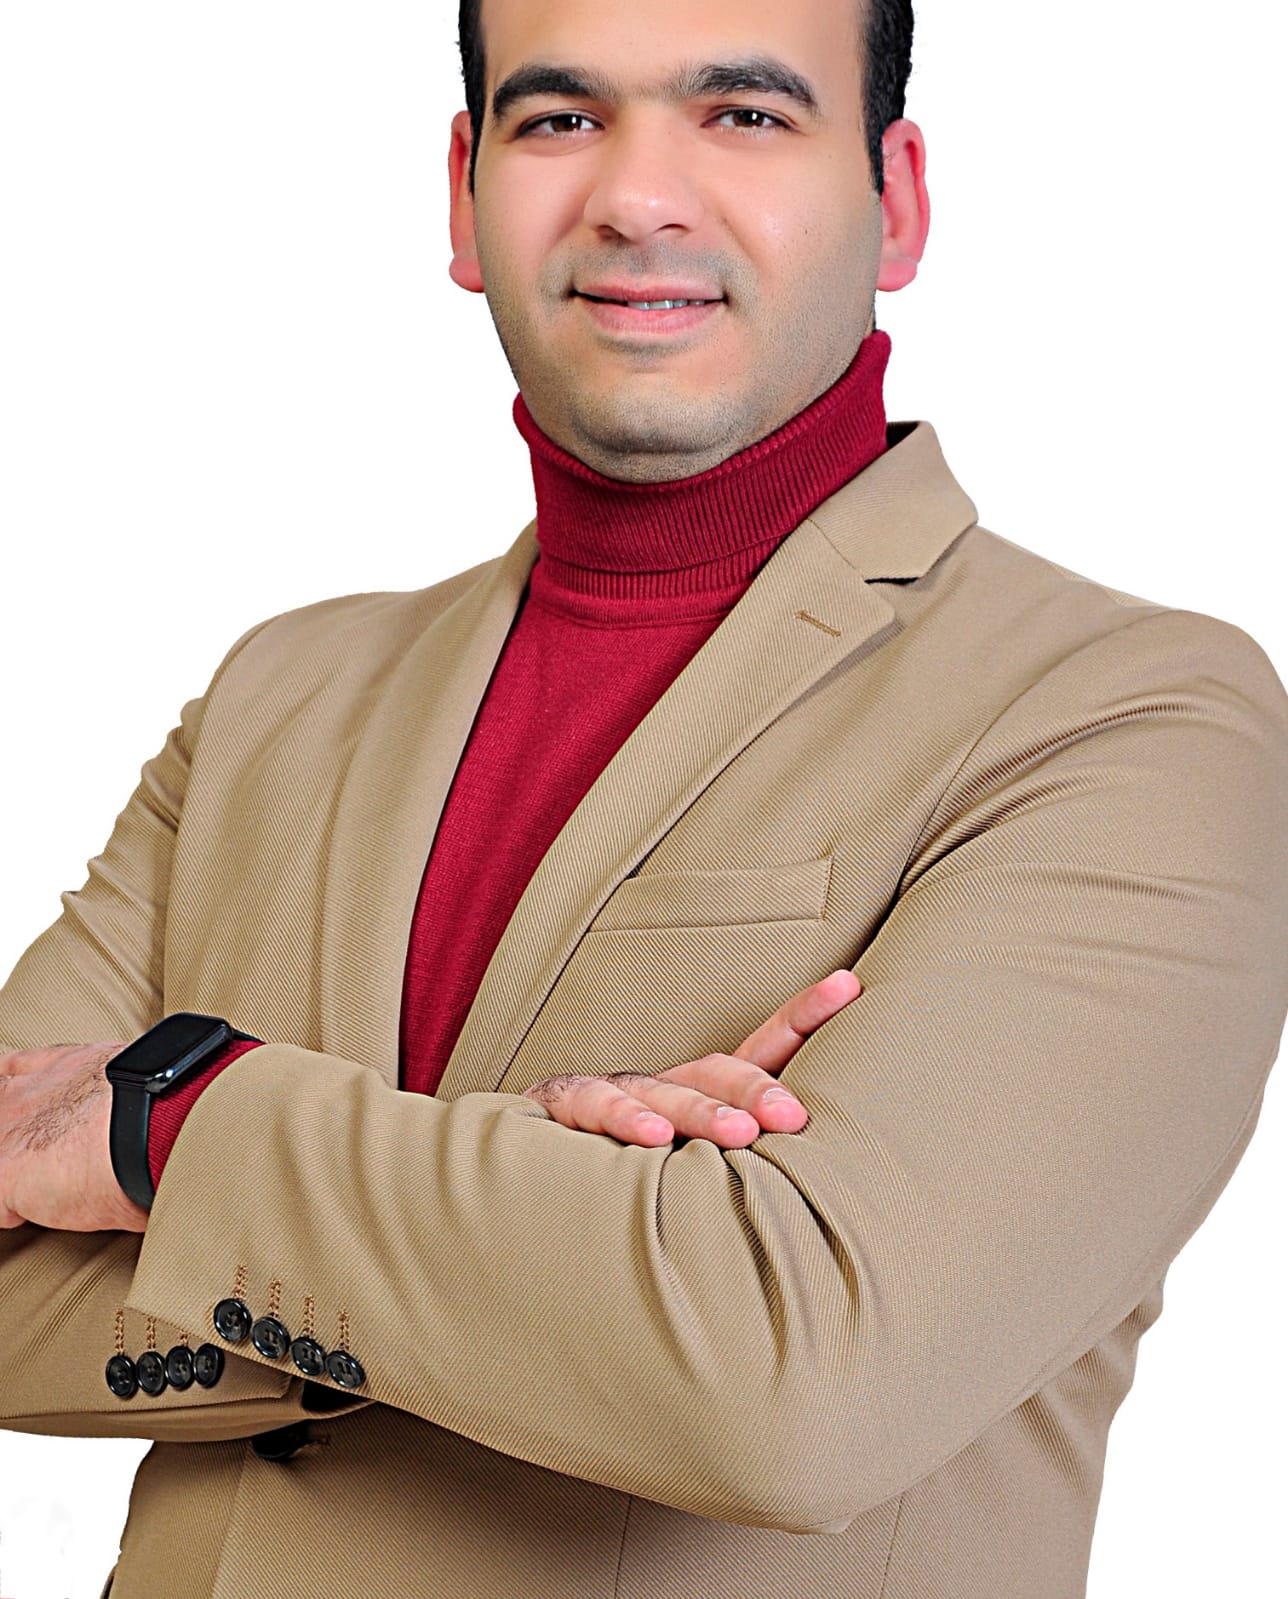 Dr. Mohamed Hassan